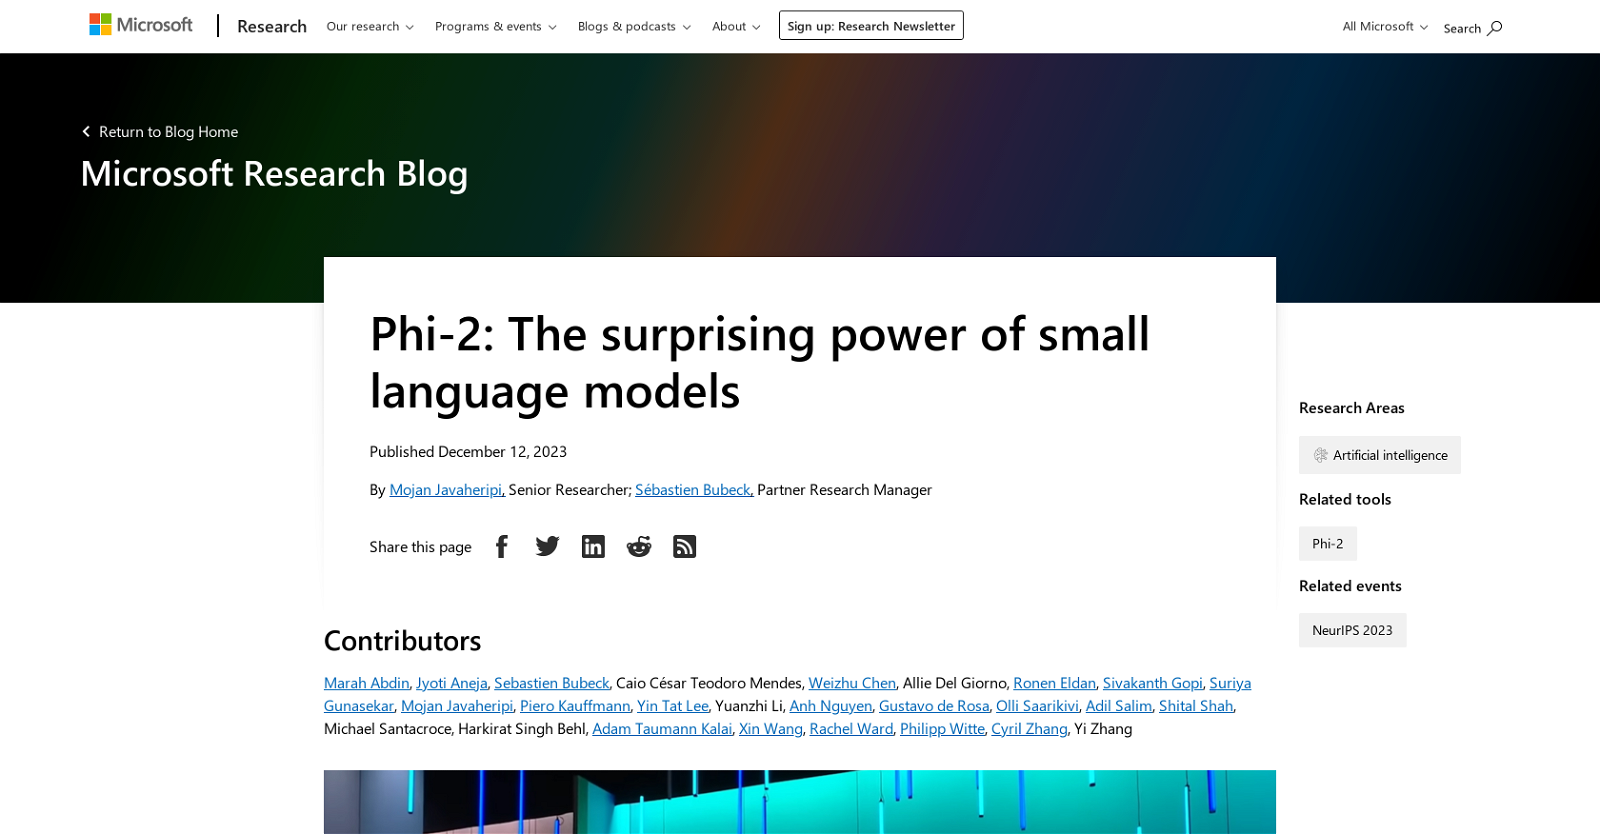 Phi-2 by Microsoft website